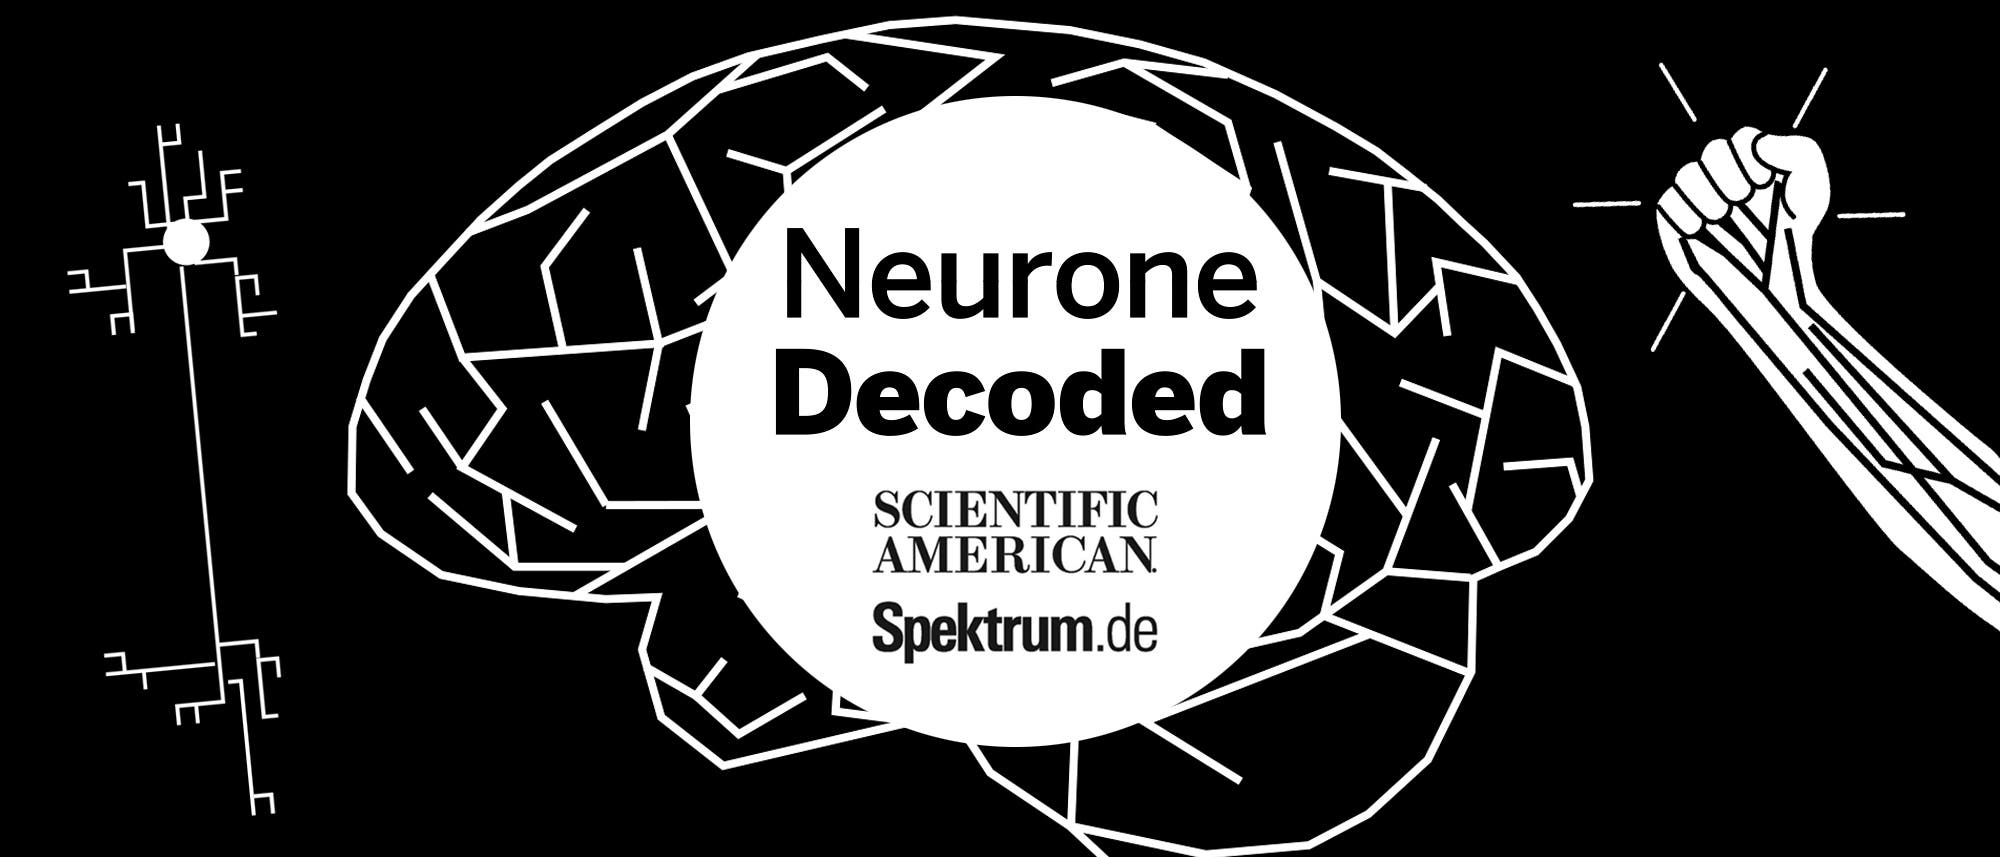 Decoded: Neurone